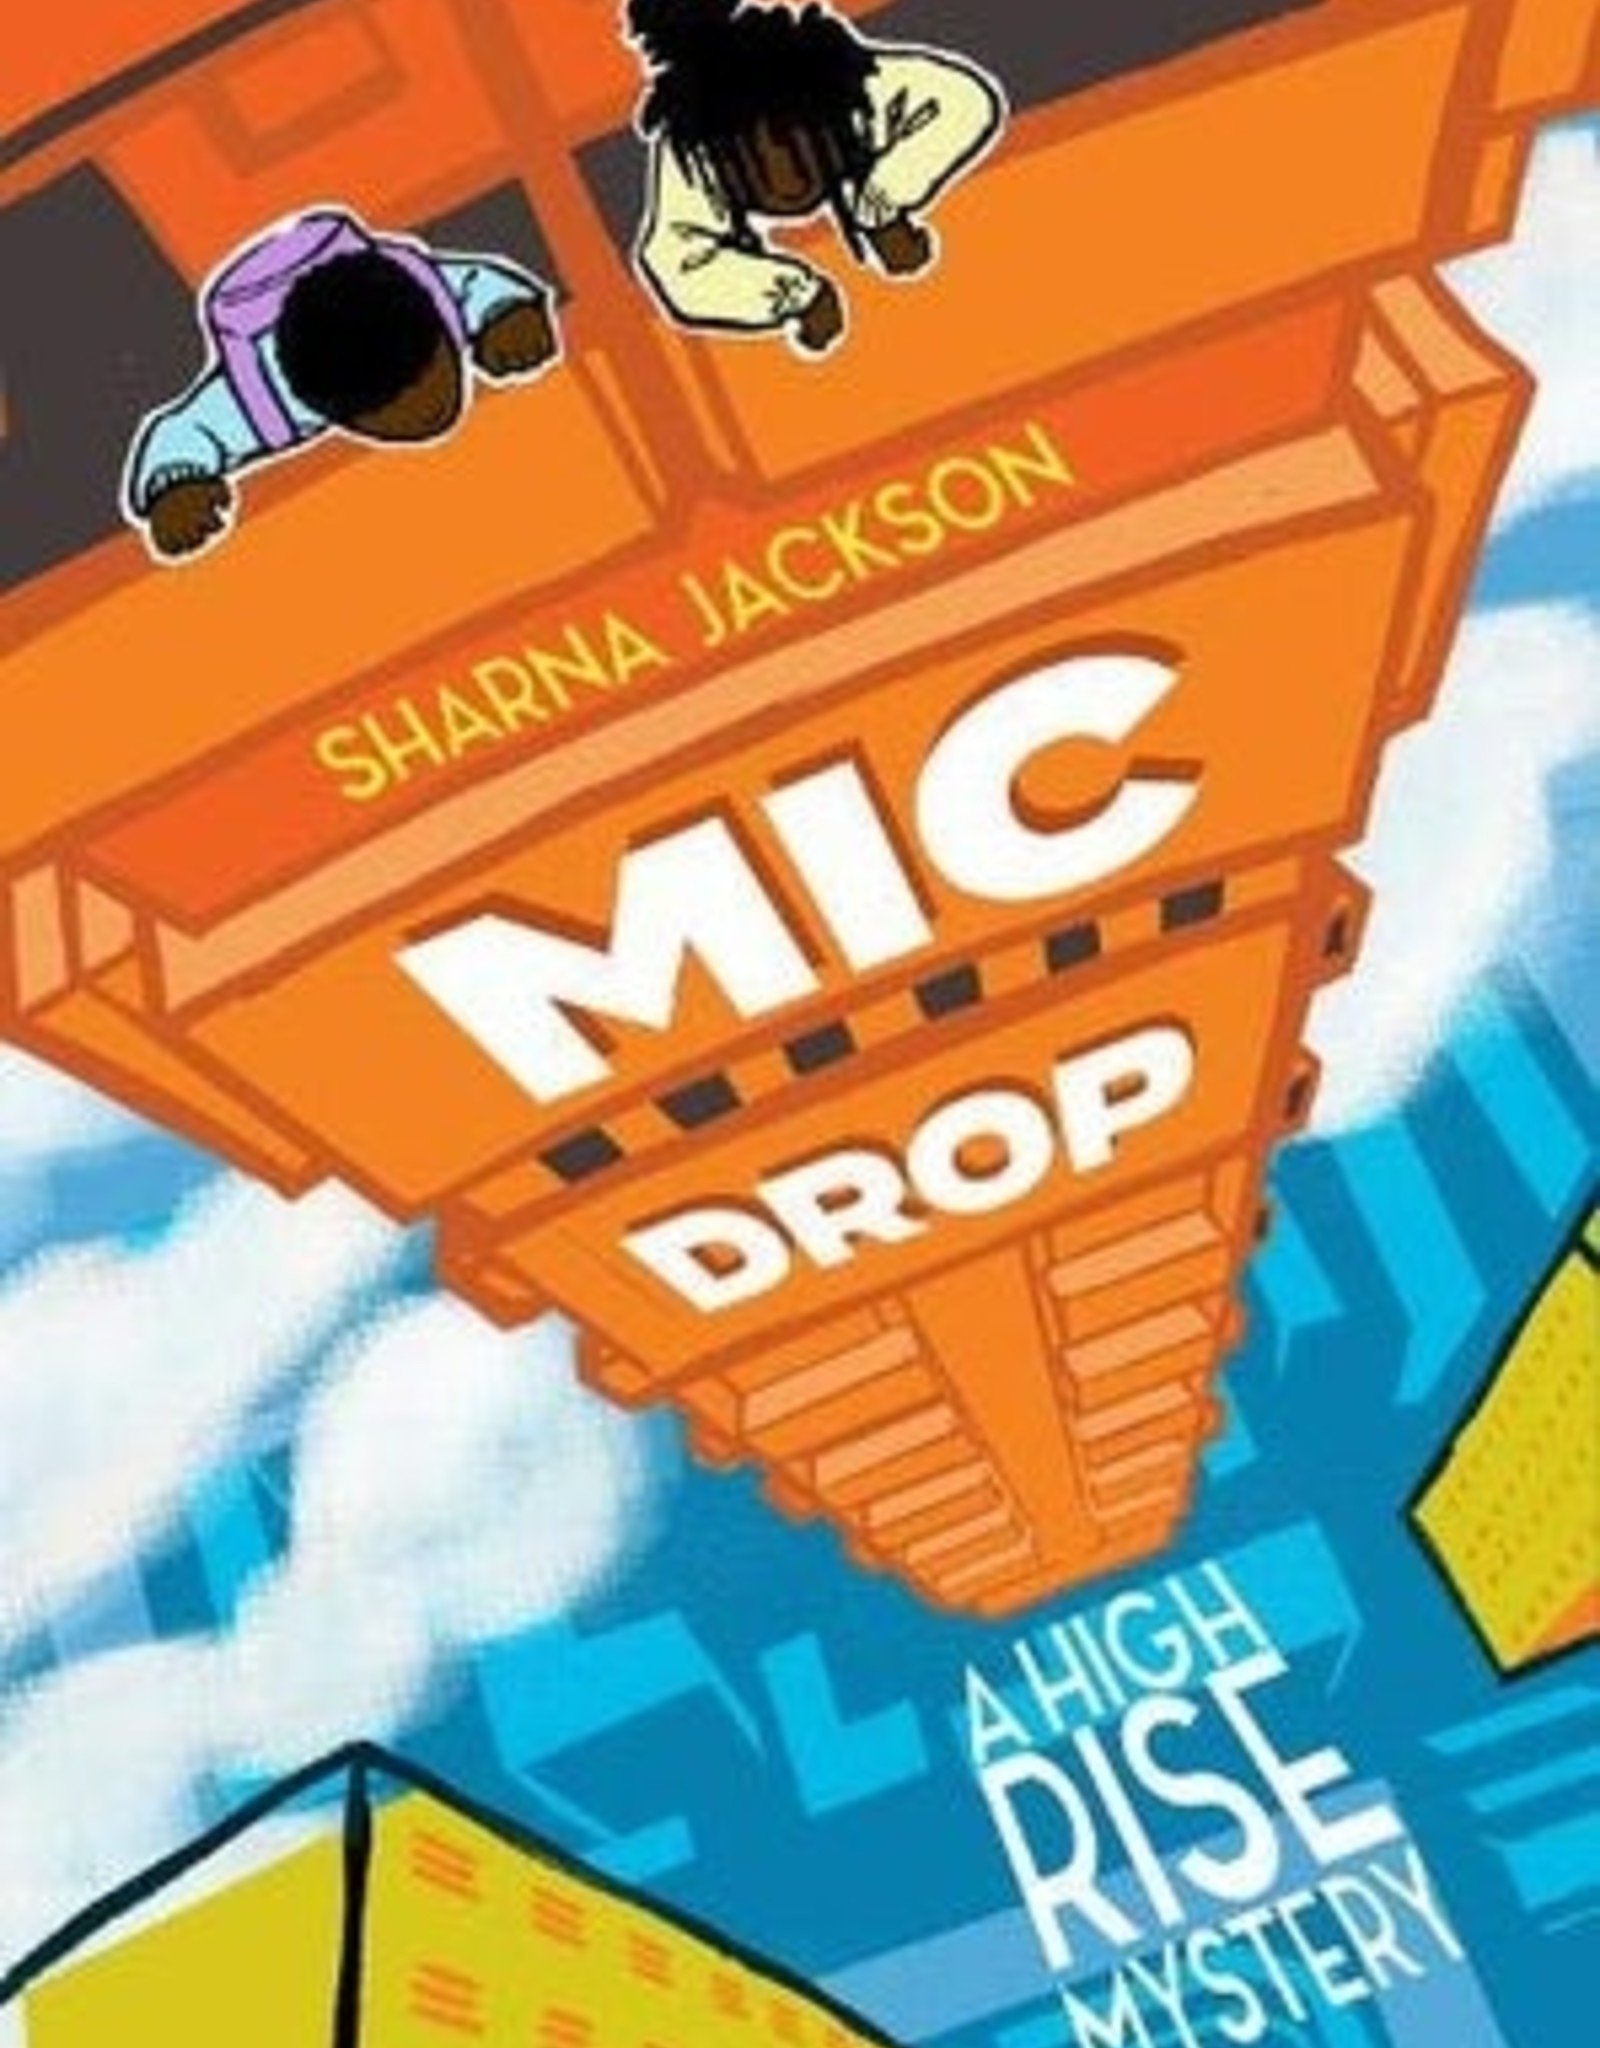 Knights Of Mic Drop by Sharna Jackson